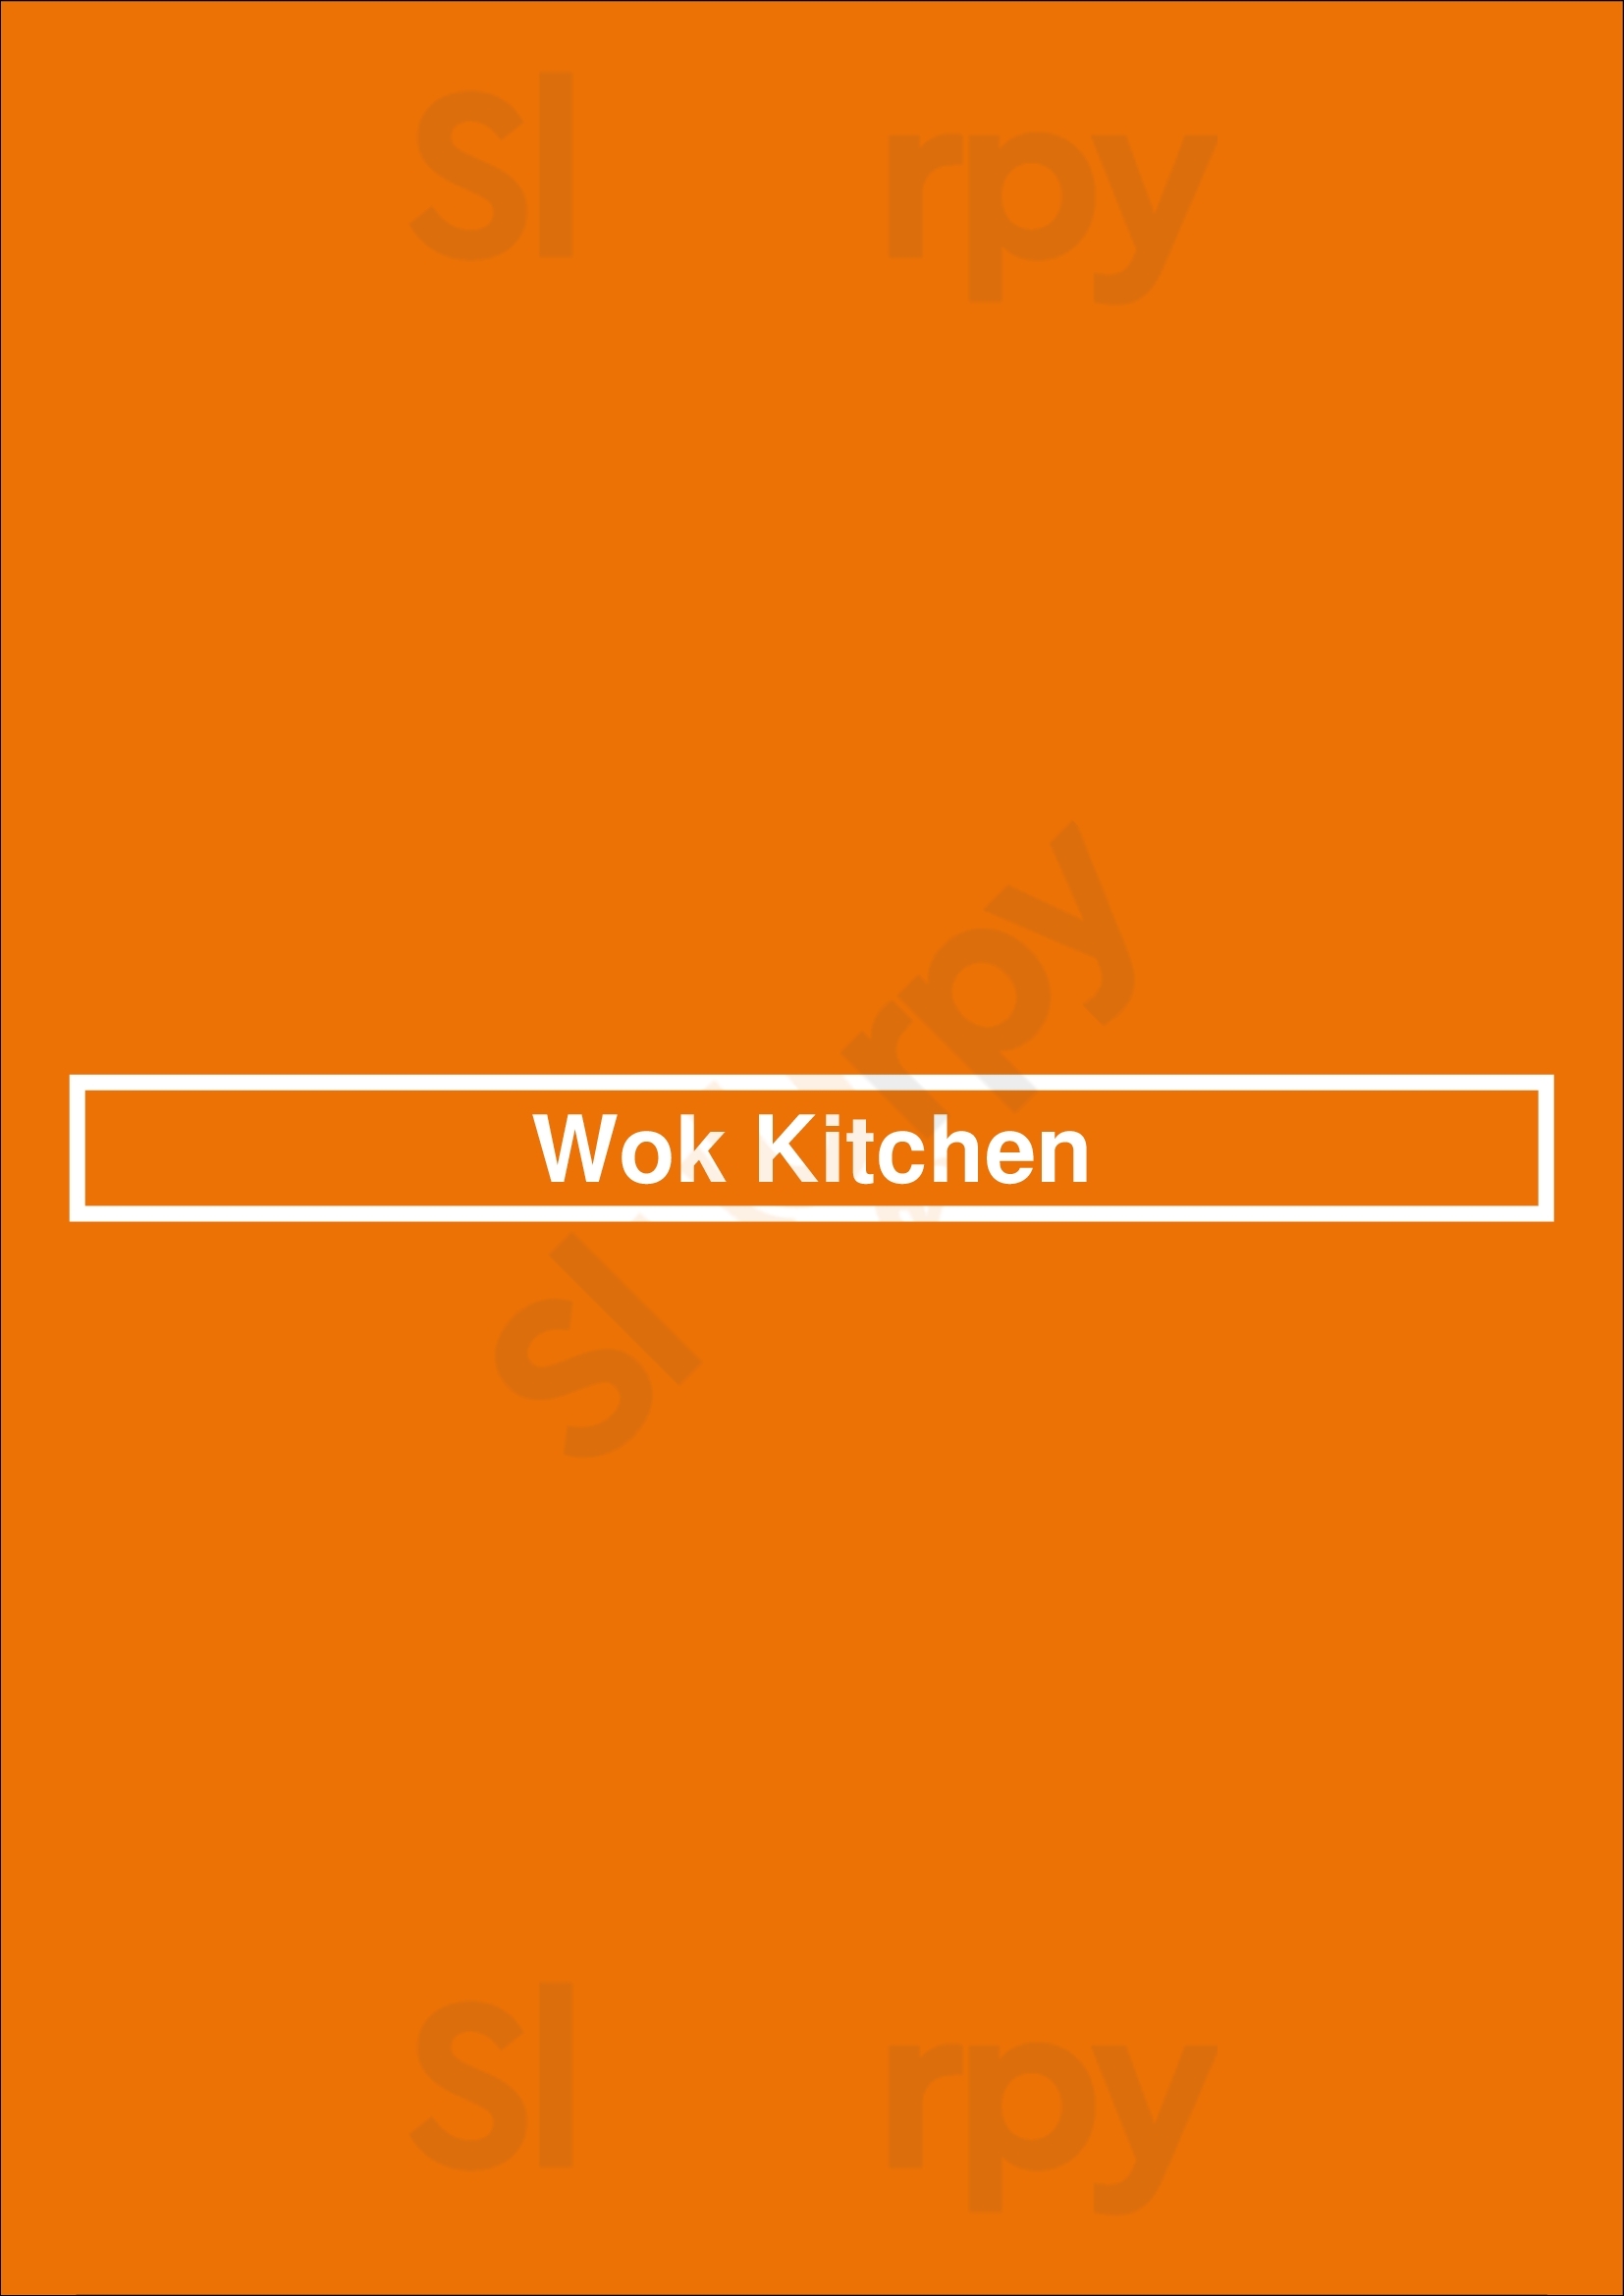 Wok Kitchen Maidstone Menu - 1